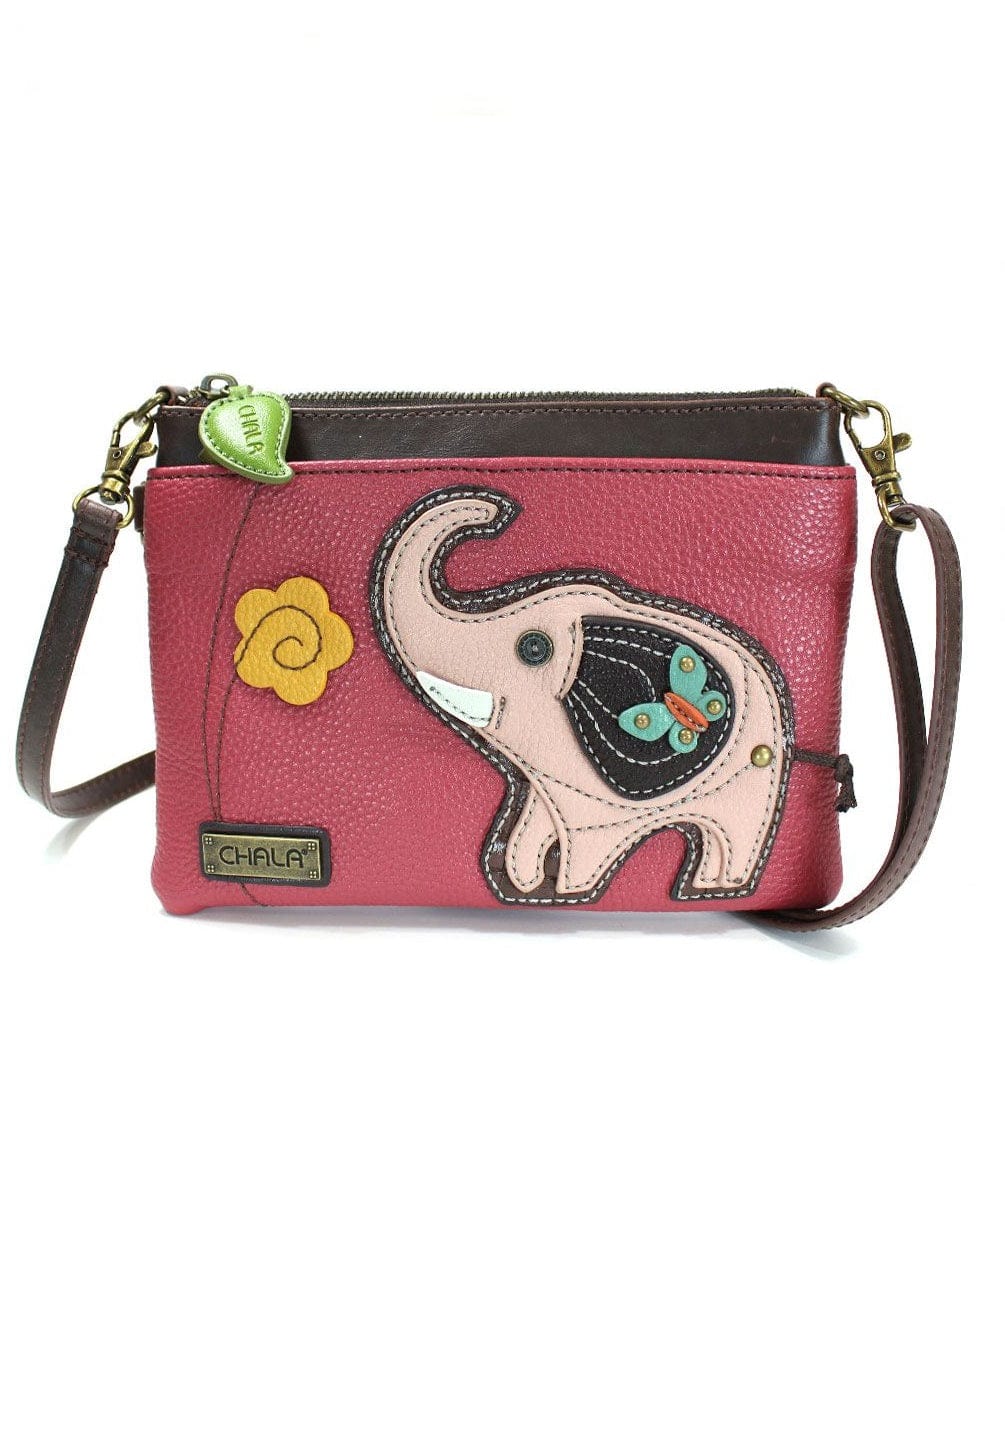 Chala purse Vegan Leather purse - Cross Body Horizontal Animals